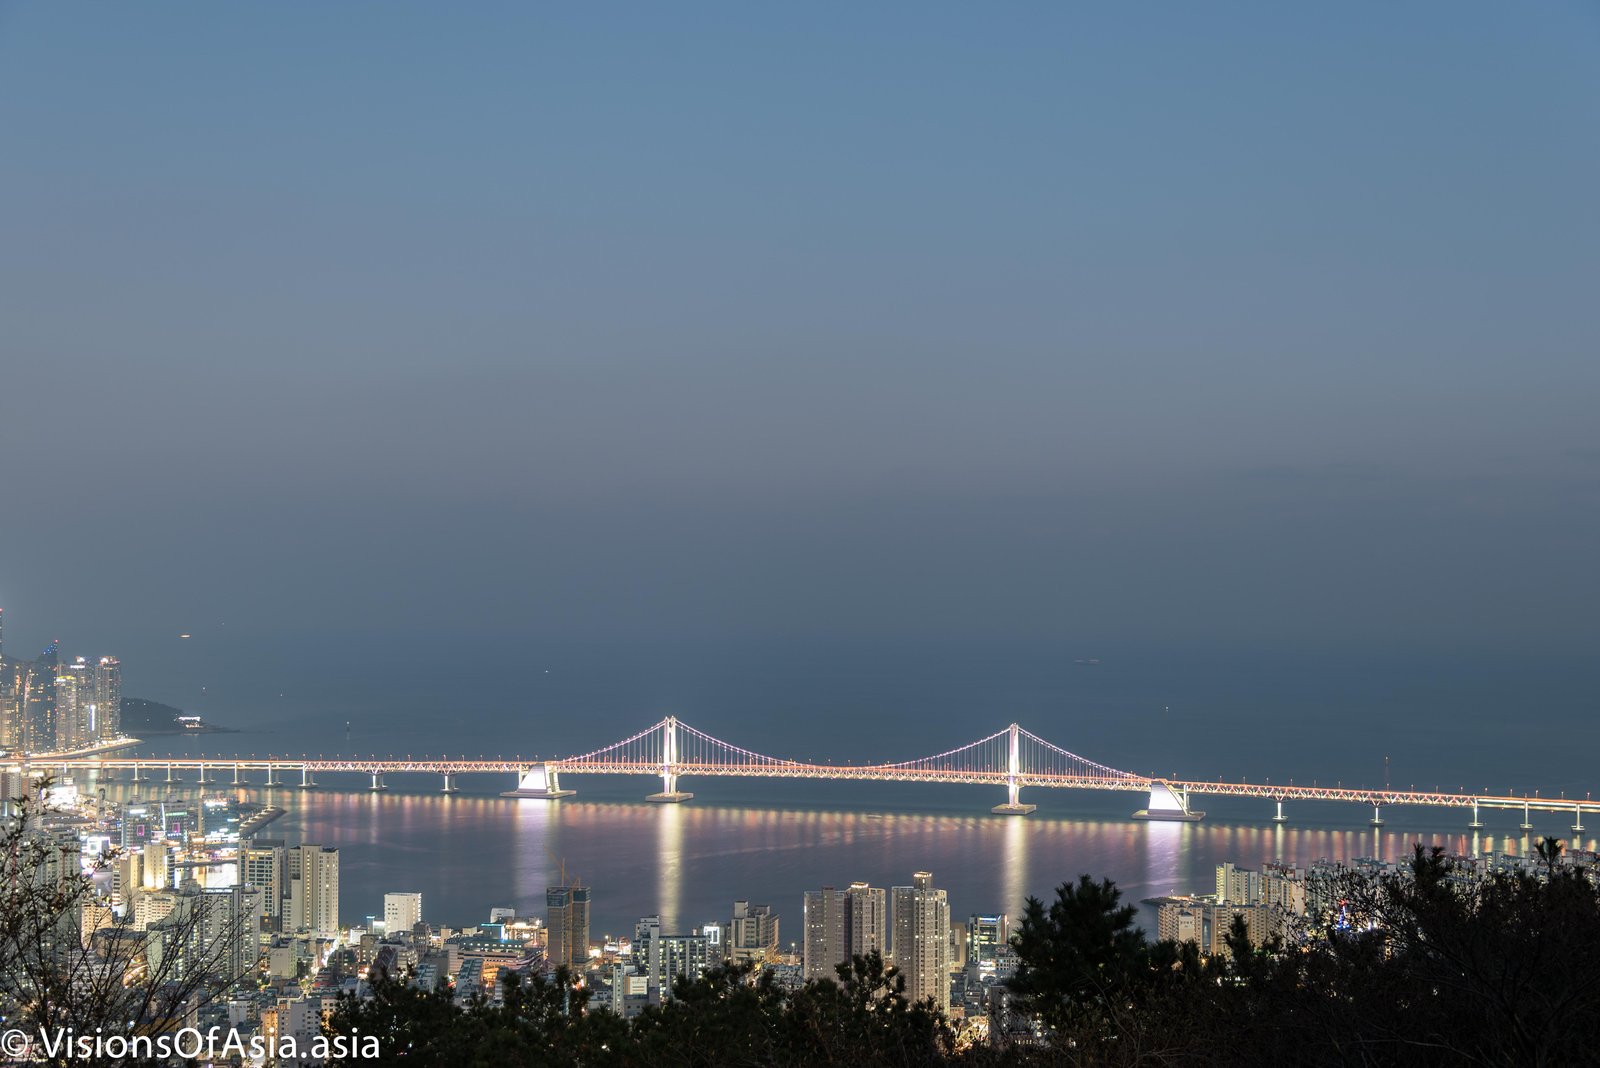 Busan's bridge at dusk